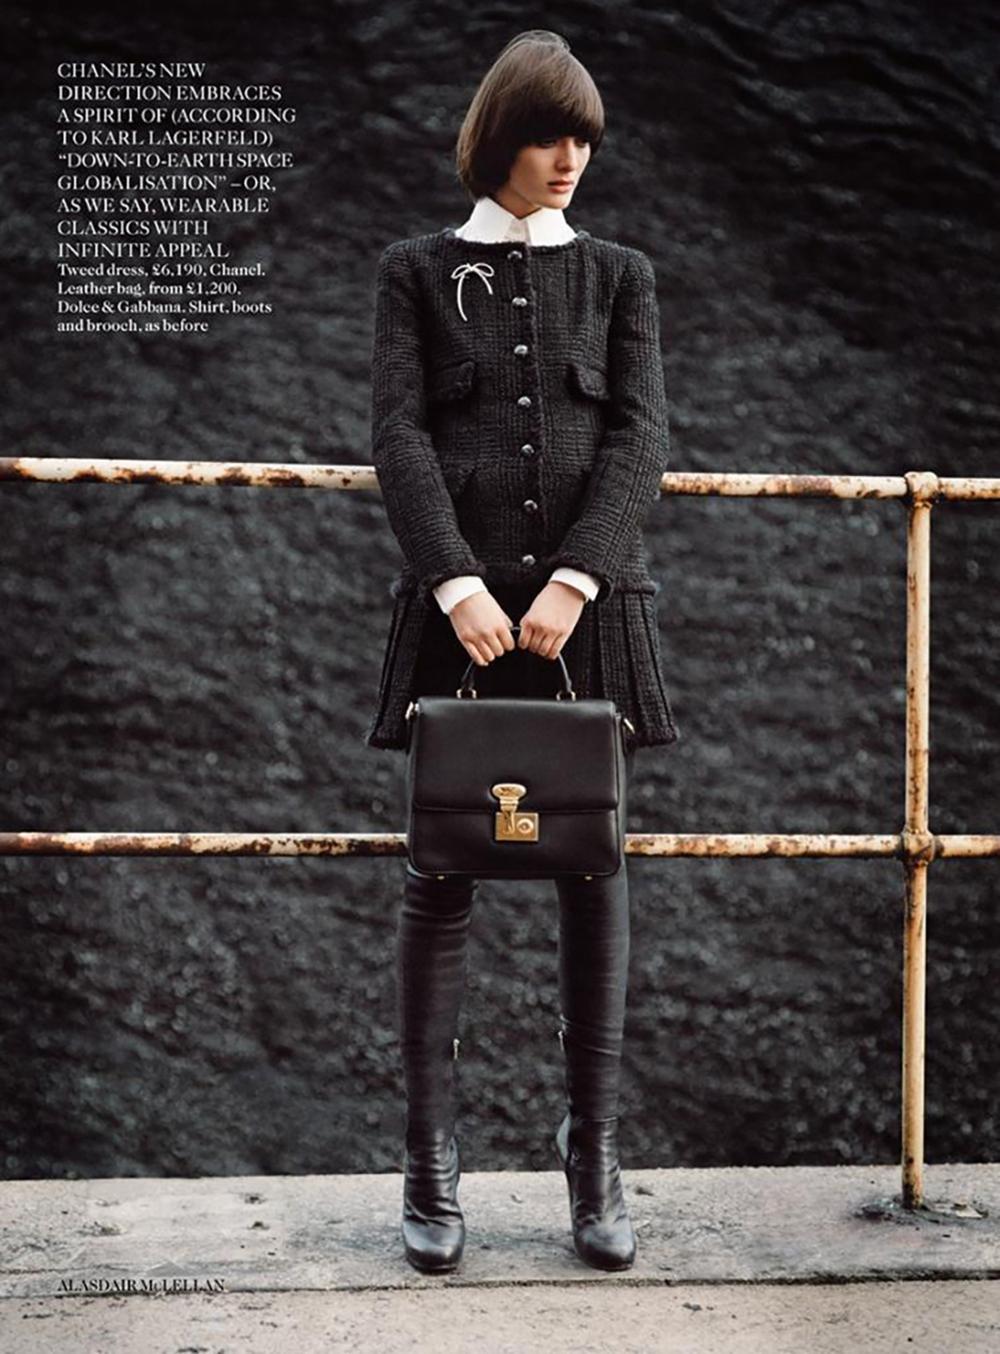 Chanel Iconic Keira Knightley Style Black Tweed Jacket 3